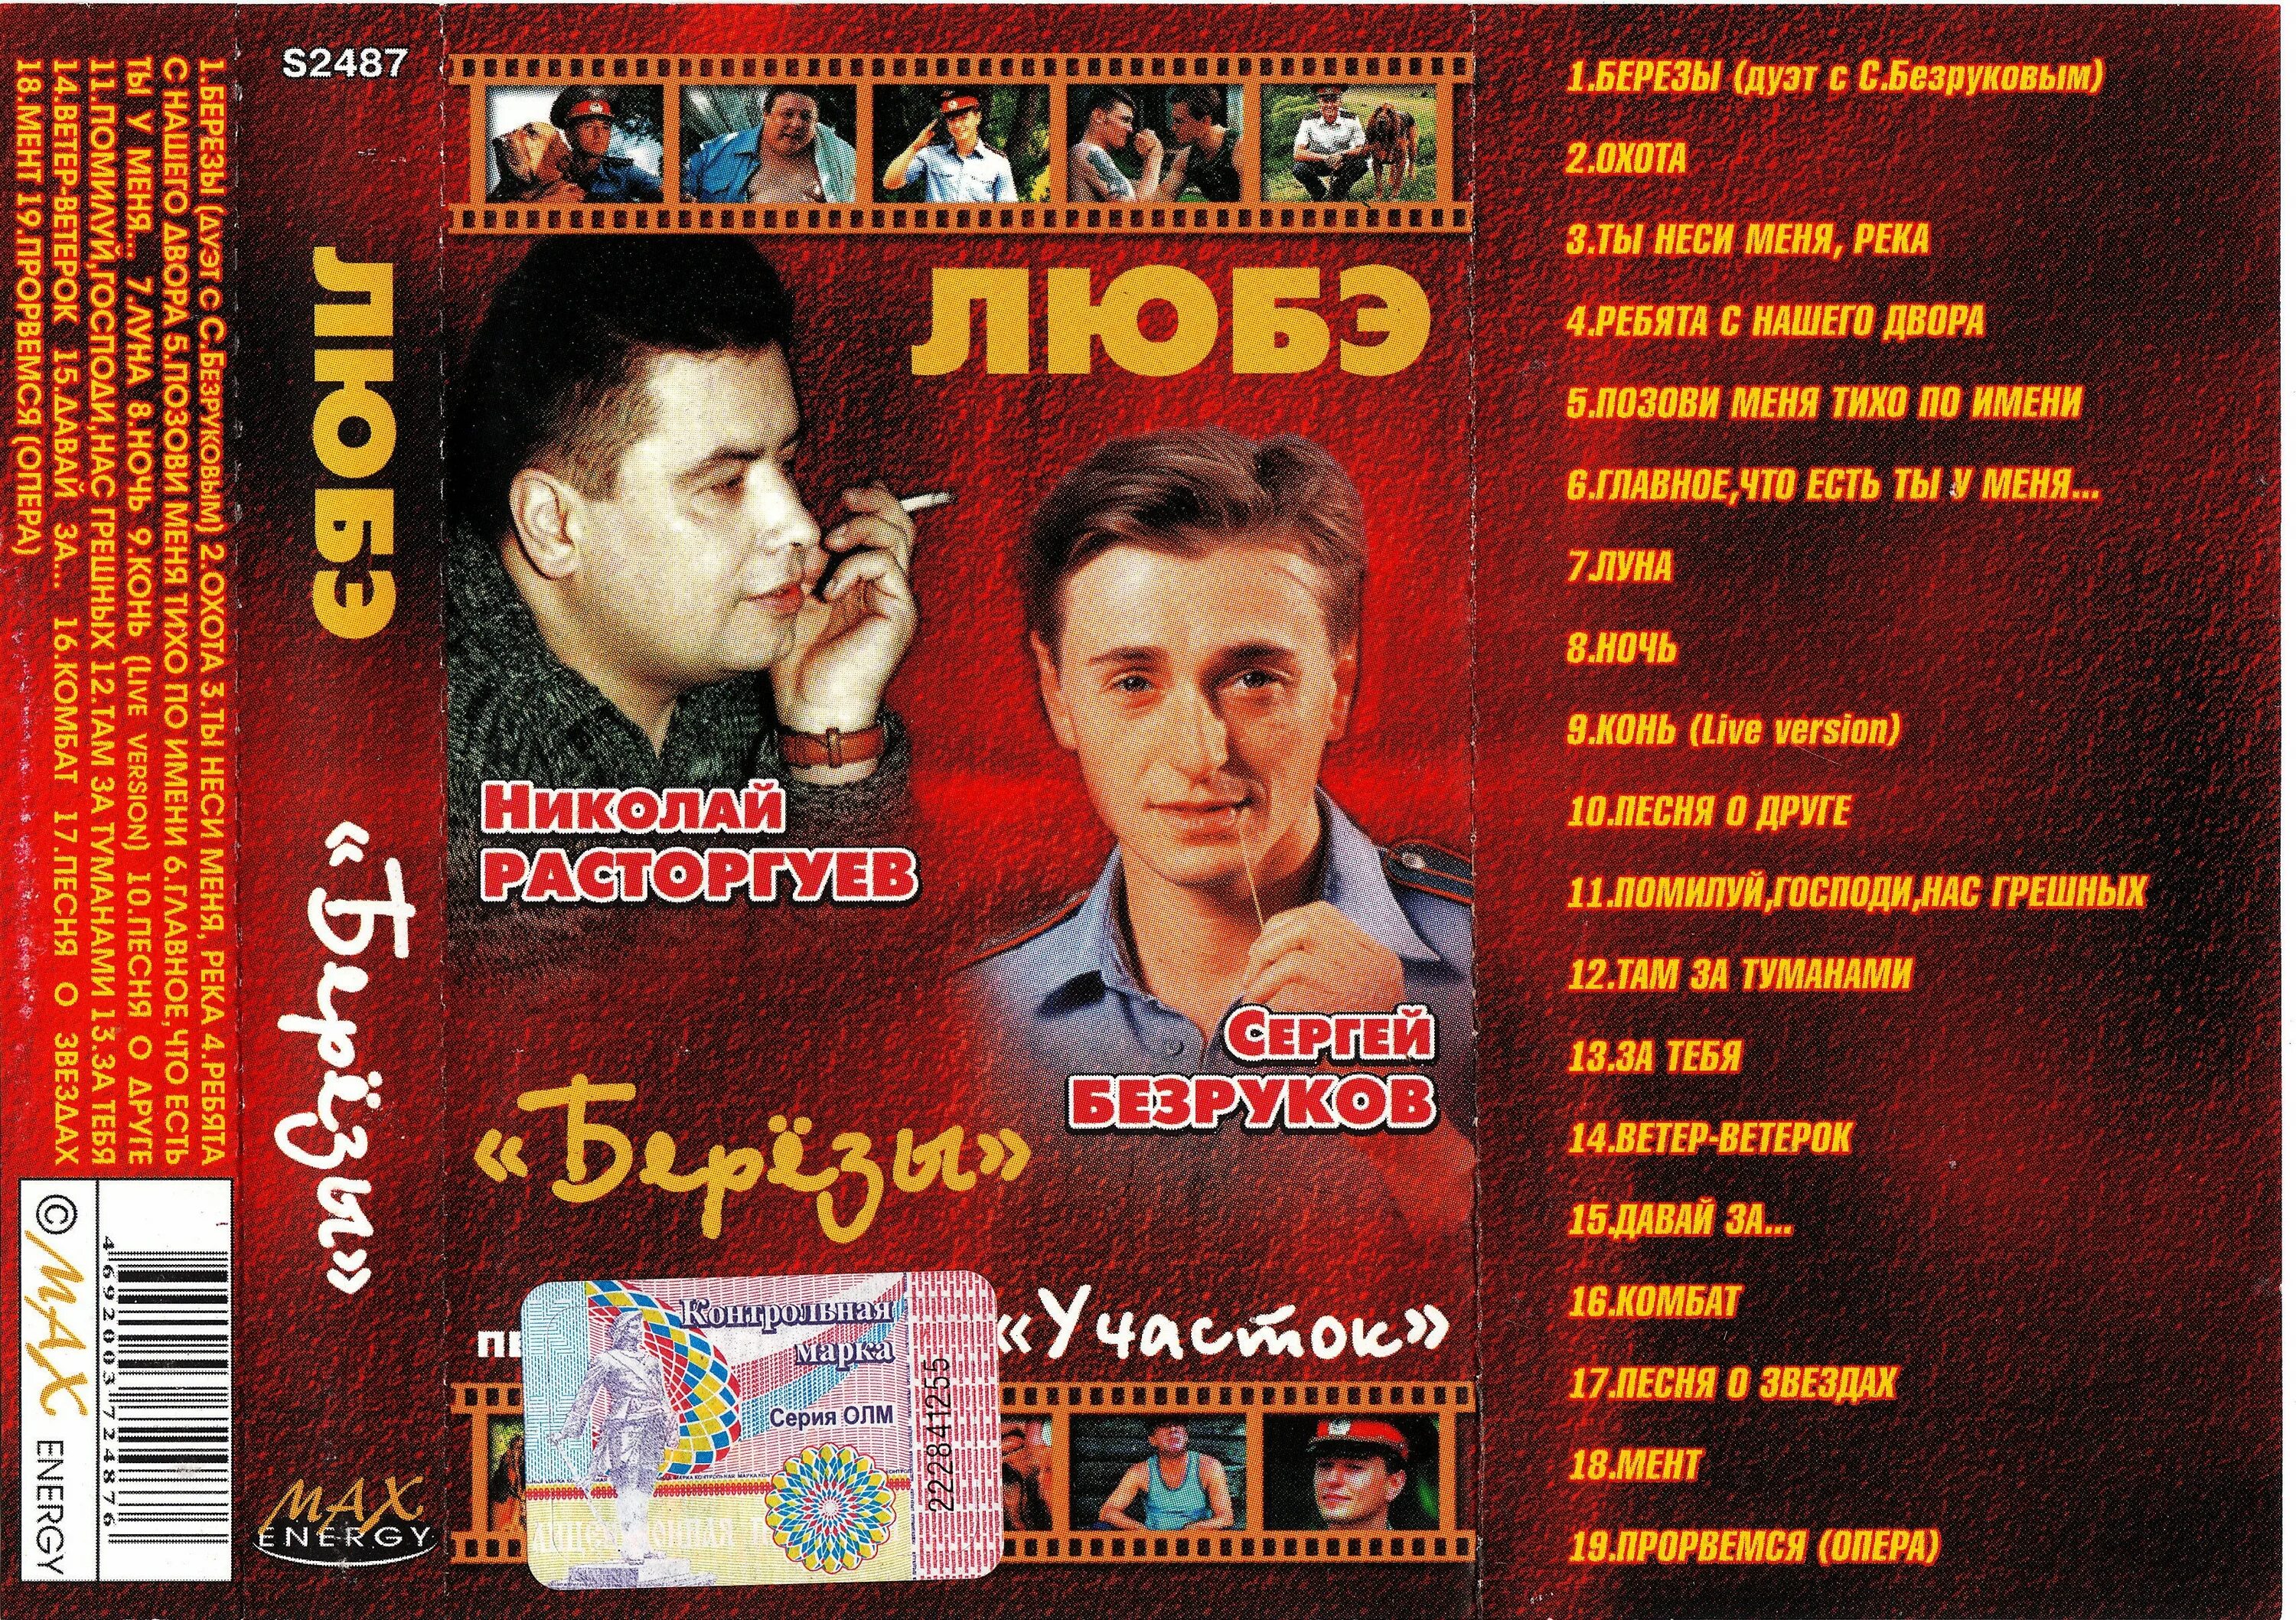 Любэ кассета 2003. Аудиокассета группы Любэ. Берёзы Безруков Любэ кассета. Альбом песен любэ